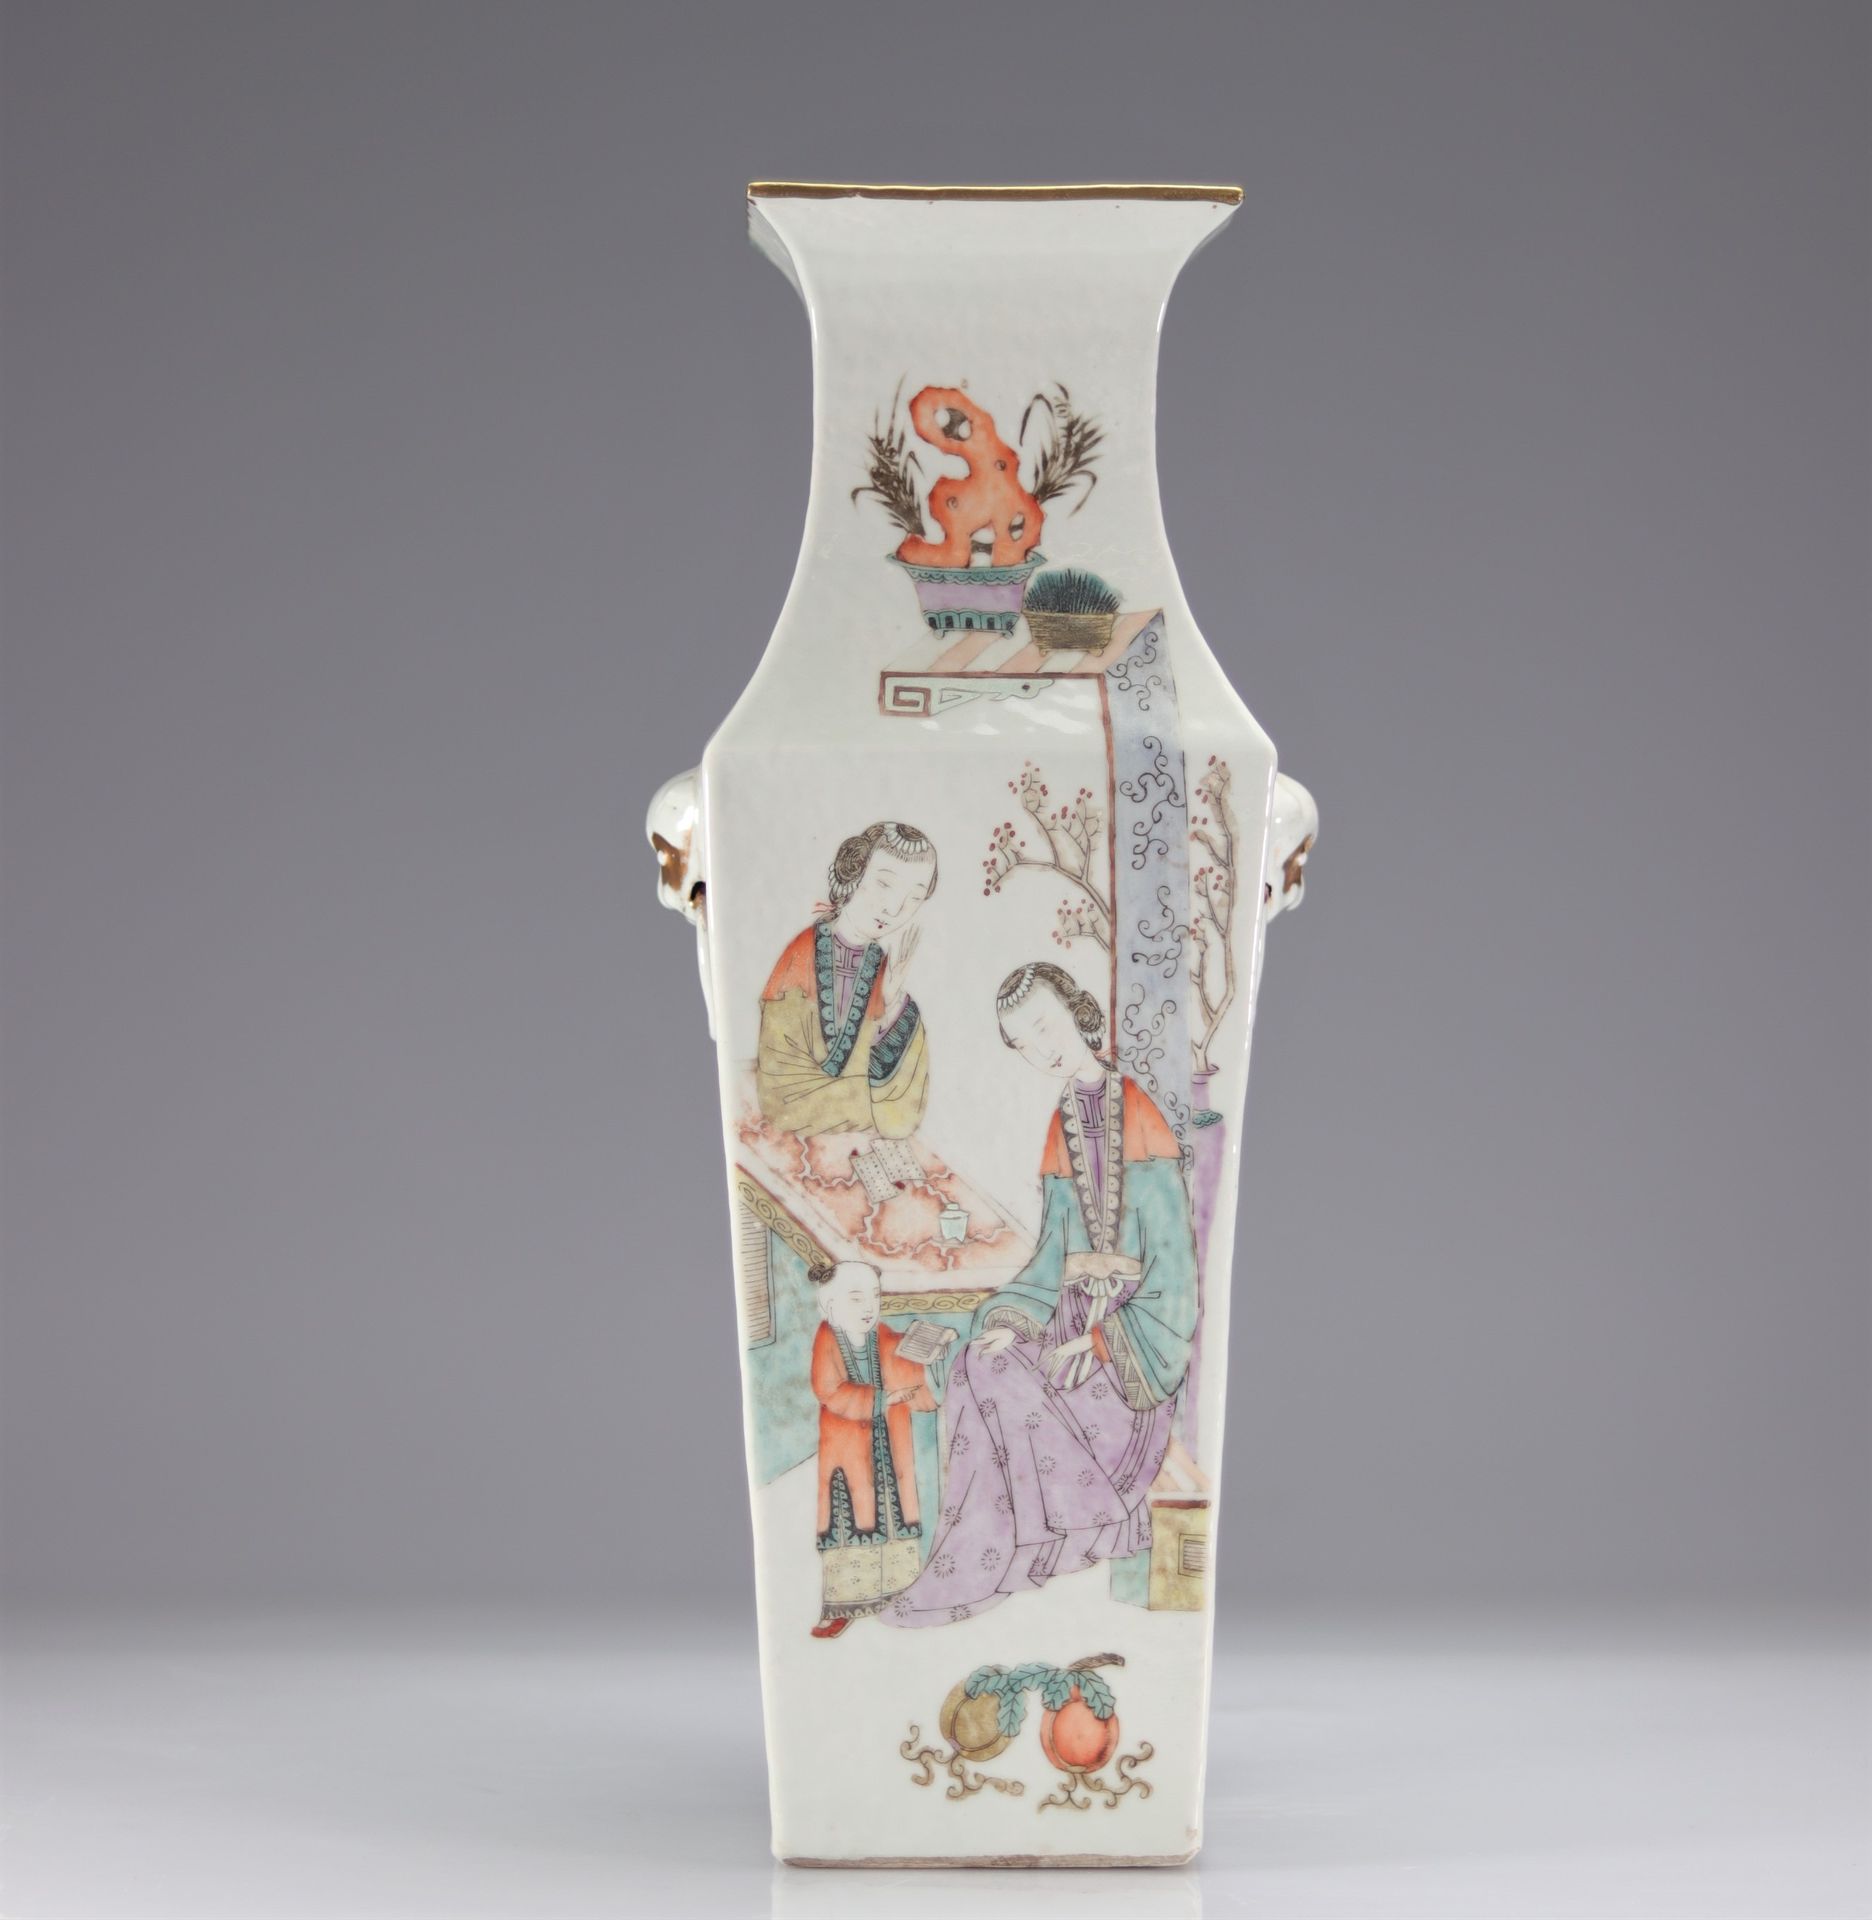 Null 年轻女性装饰的方形瓷器花瓶
重量：3.85公斤
地区：中国
尺寸：高440毫米
状况：颈部有小的修复痕